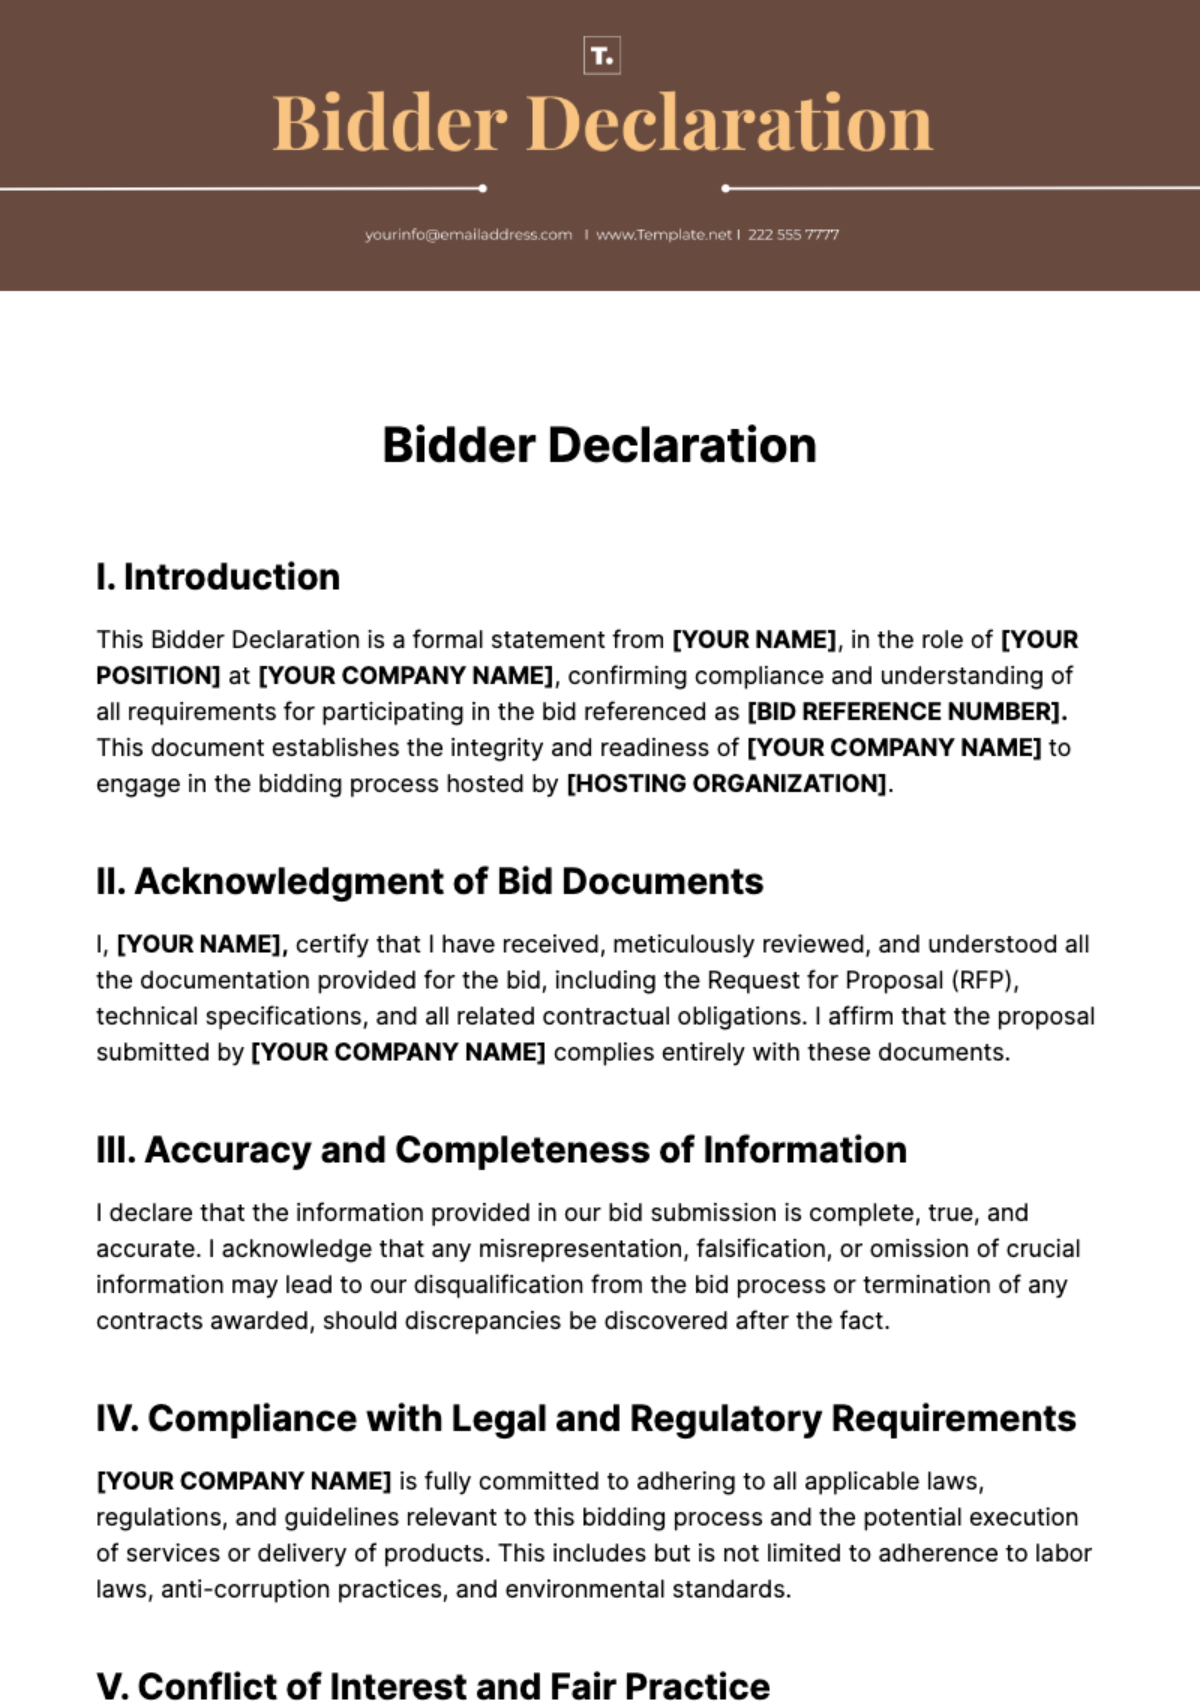 Free Bidder Declaration Template